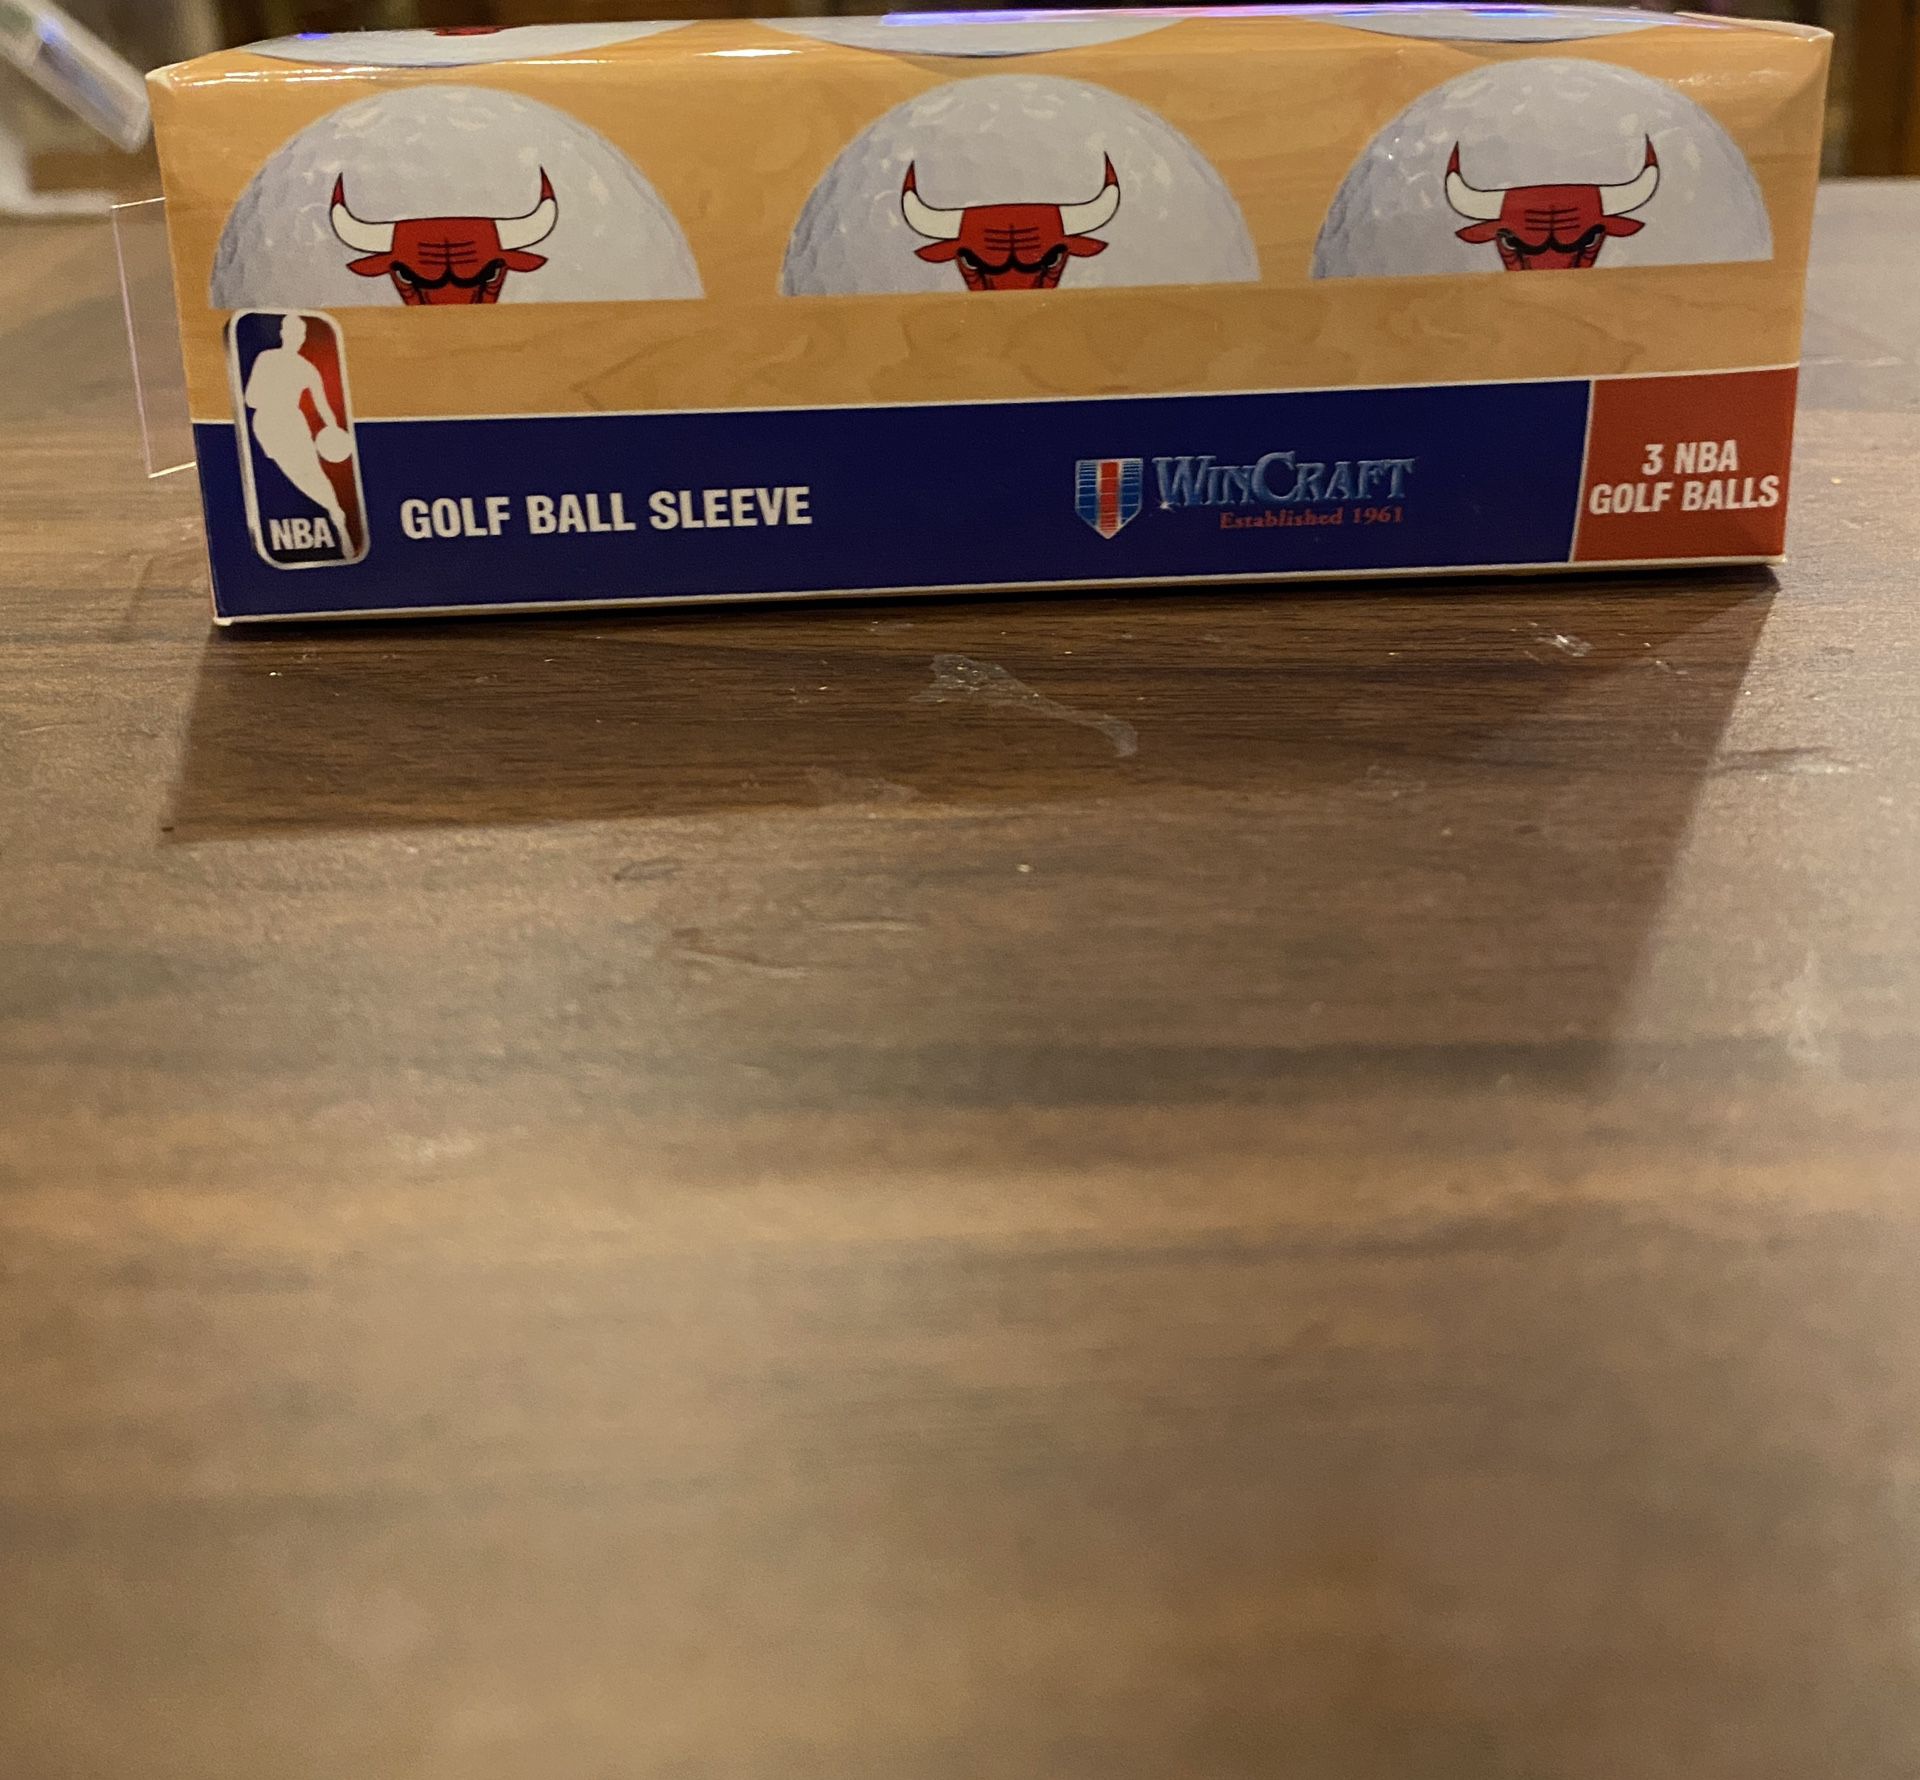 Bulls 3 Pack NBA Golf Balls (Brand New)